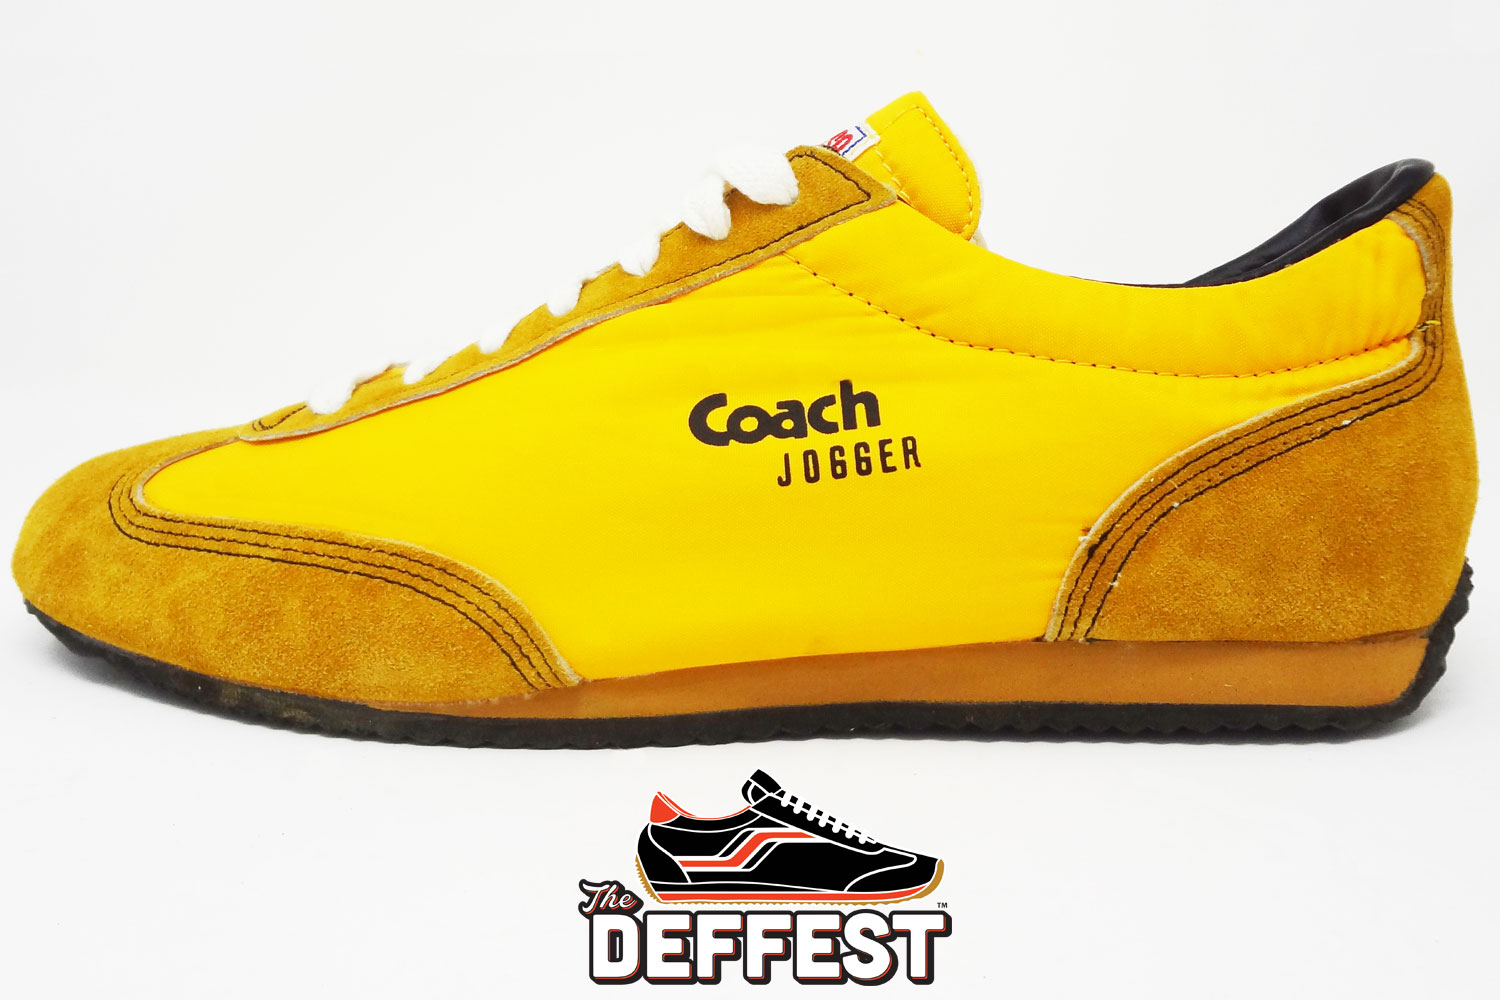 Converse Coach Jogger 70s vintage sneakers